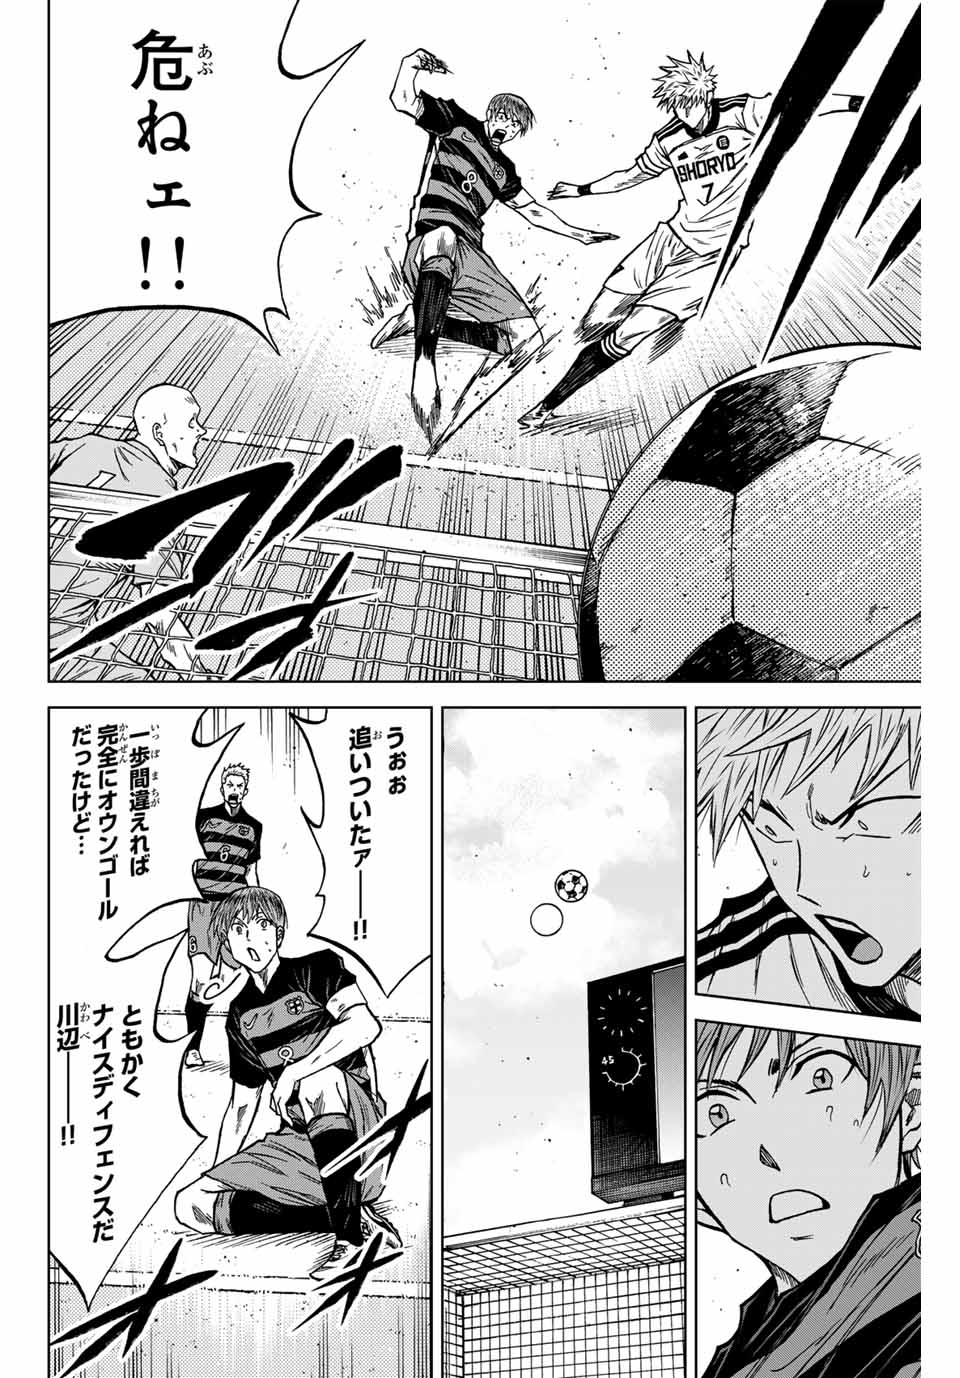 Aoku Somero - Chapter 120 - Page 6